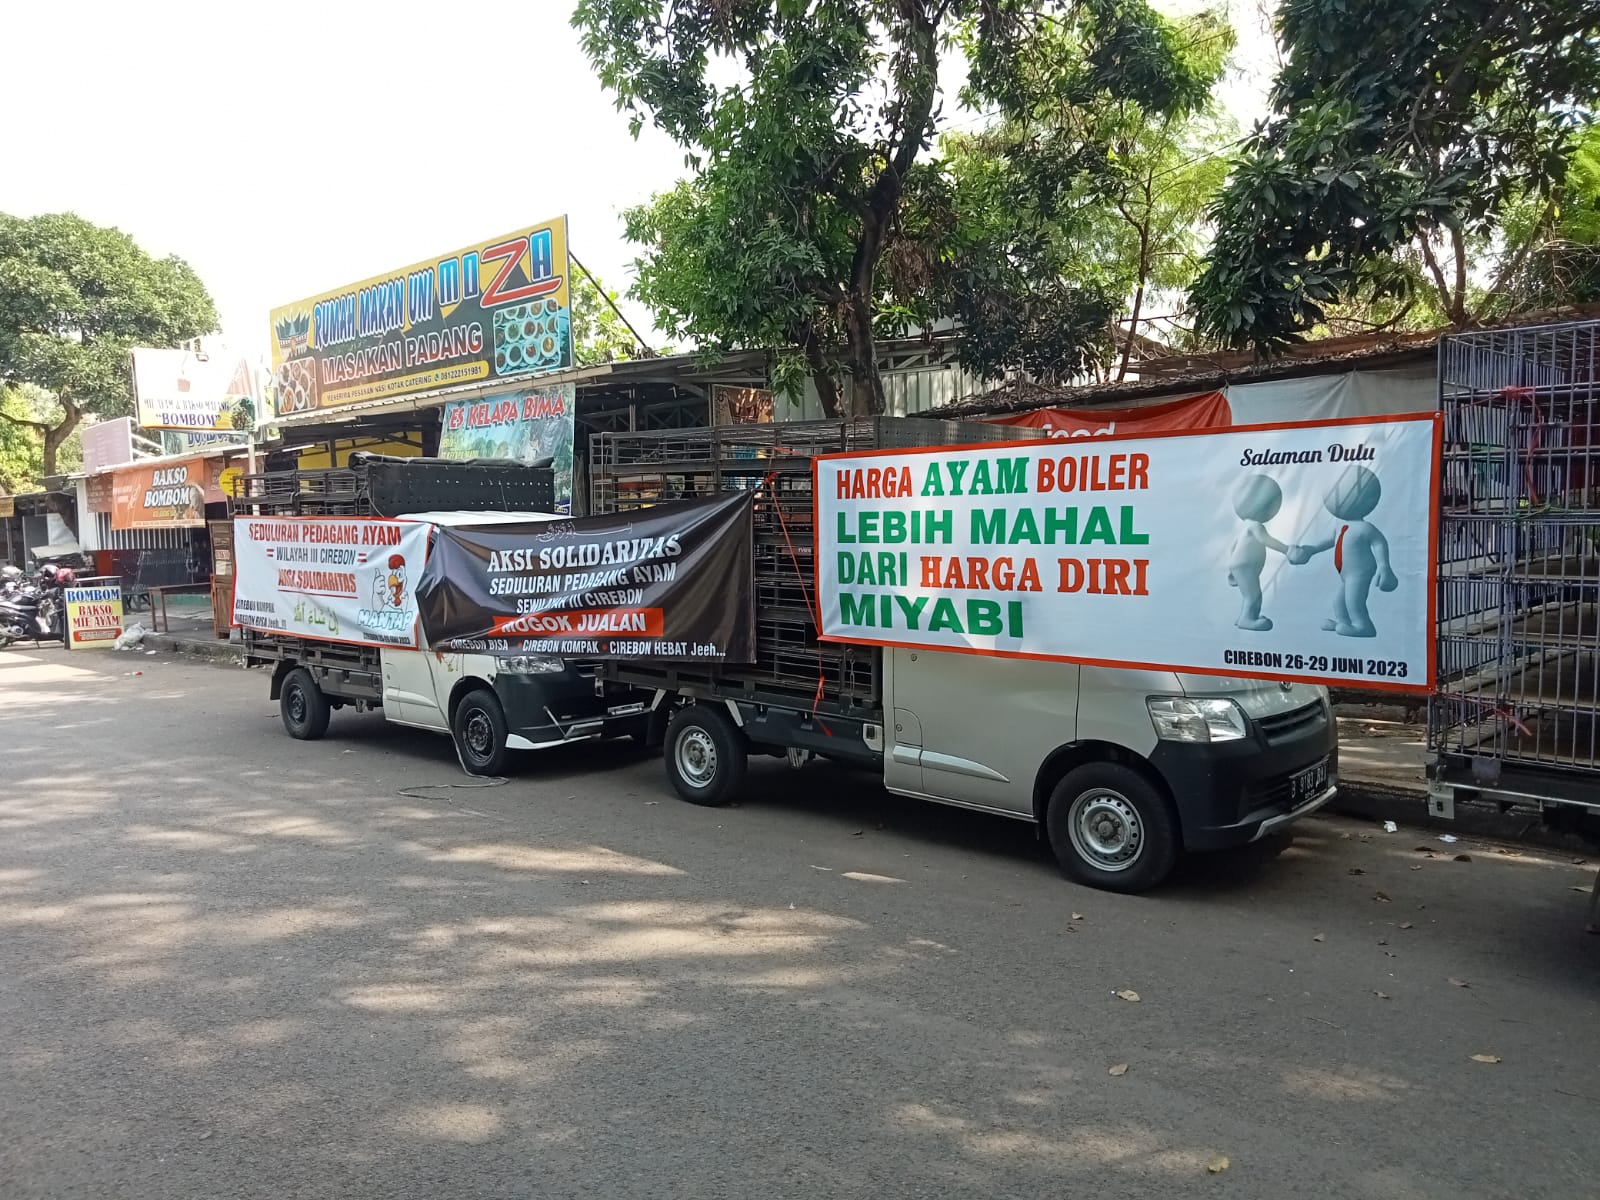 Pedagang Ayam di Cirebon Diminta Kompak Libur, Bakal Ada Sweeping di Tol untuk yang Nekat kirim